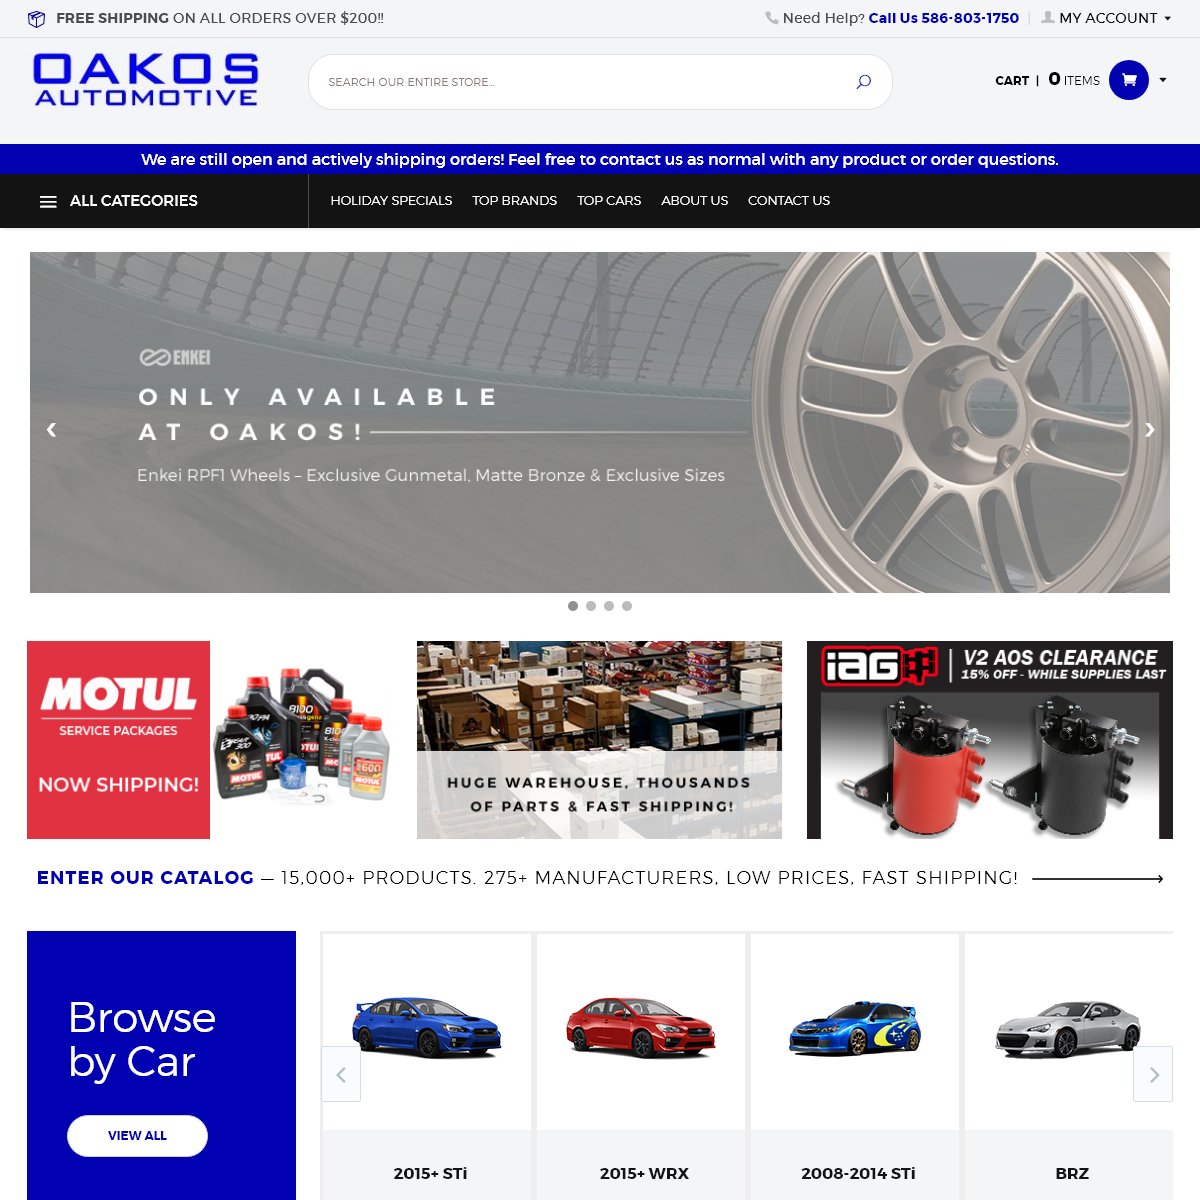 A complete backup of oakos.com